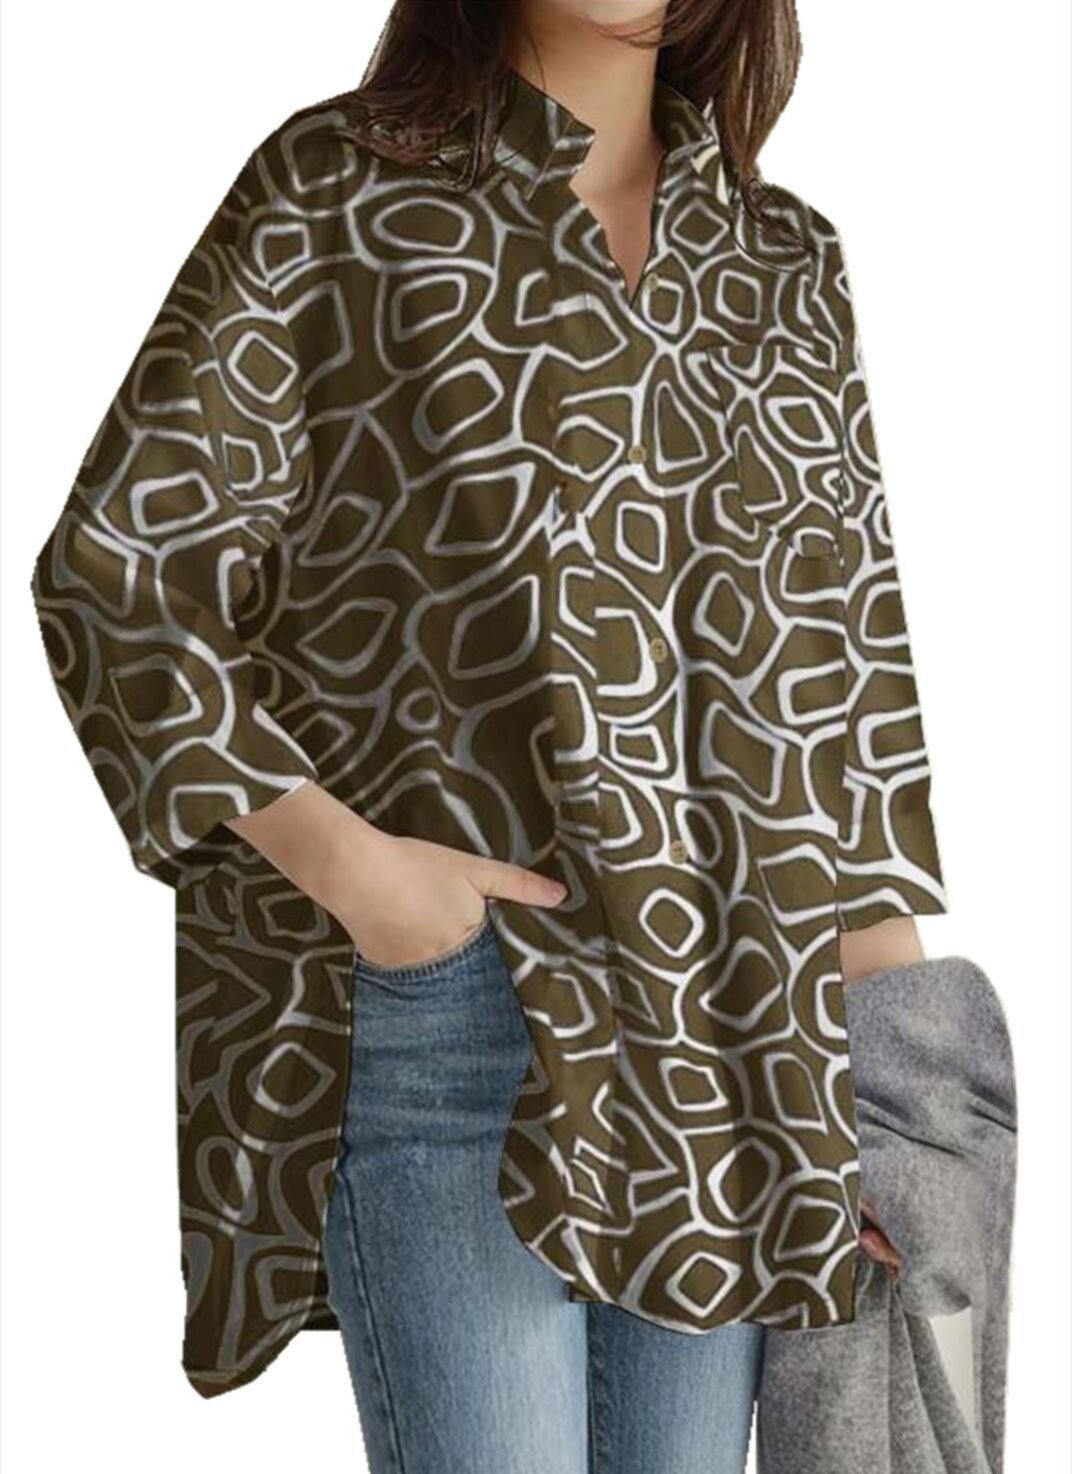 Fashion printed loose fitting casual long sleeved shirt